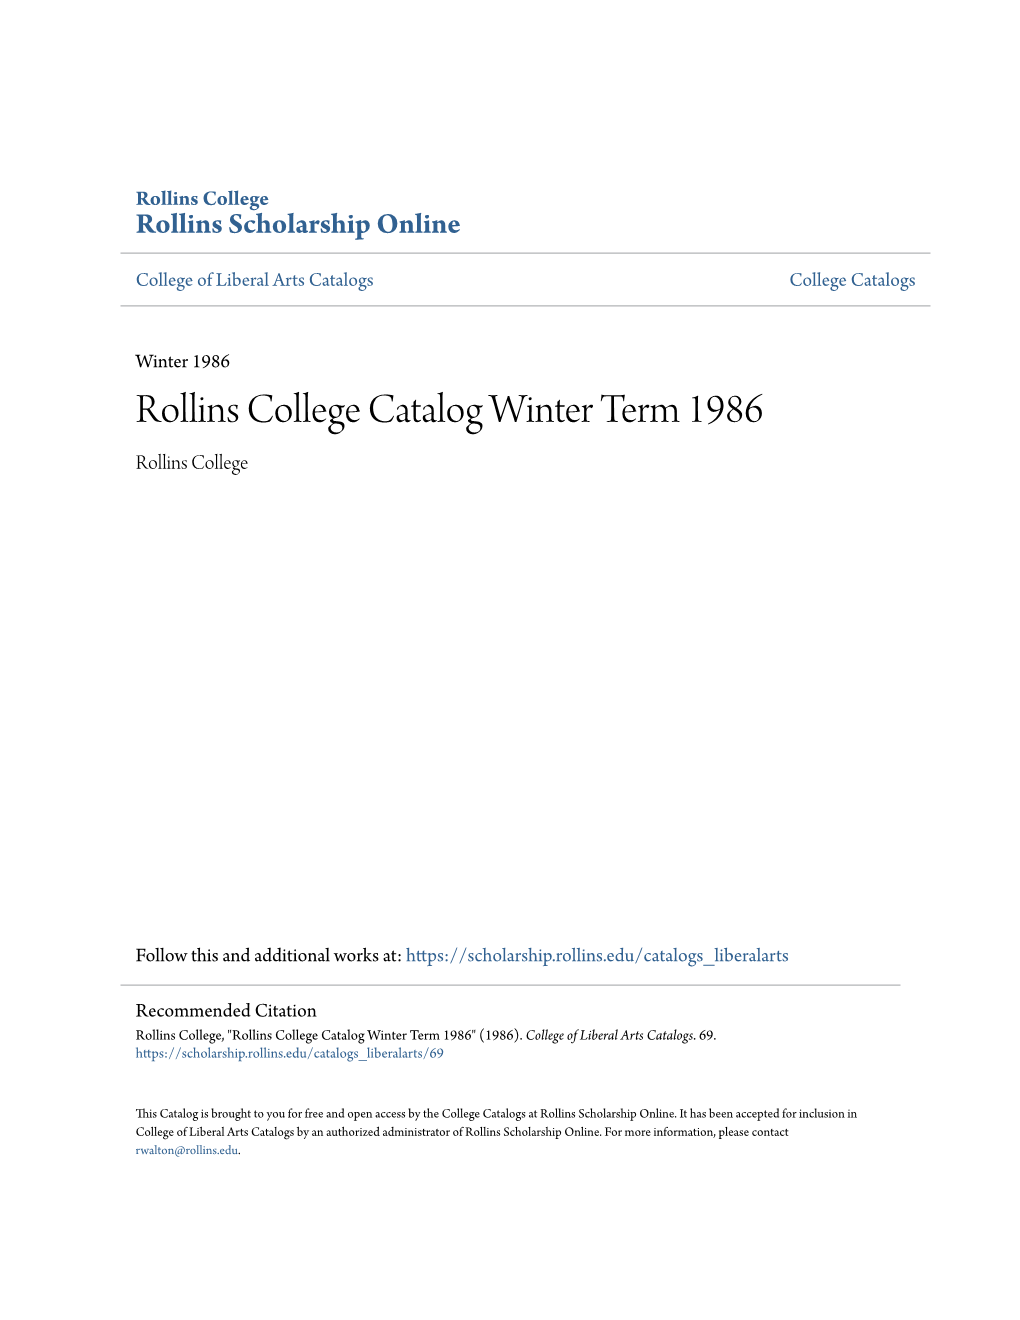 Rollins College Catalog Winter Term 1986 Rollins College